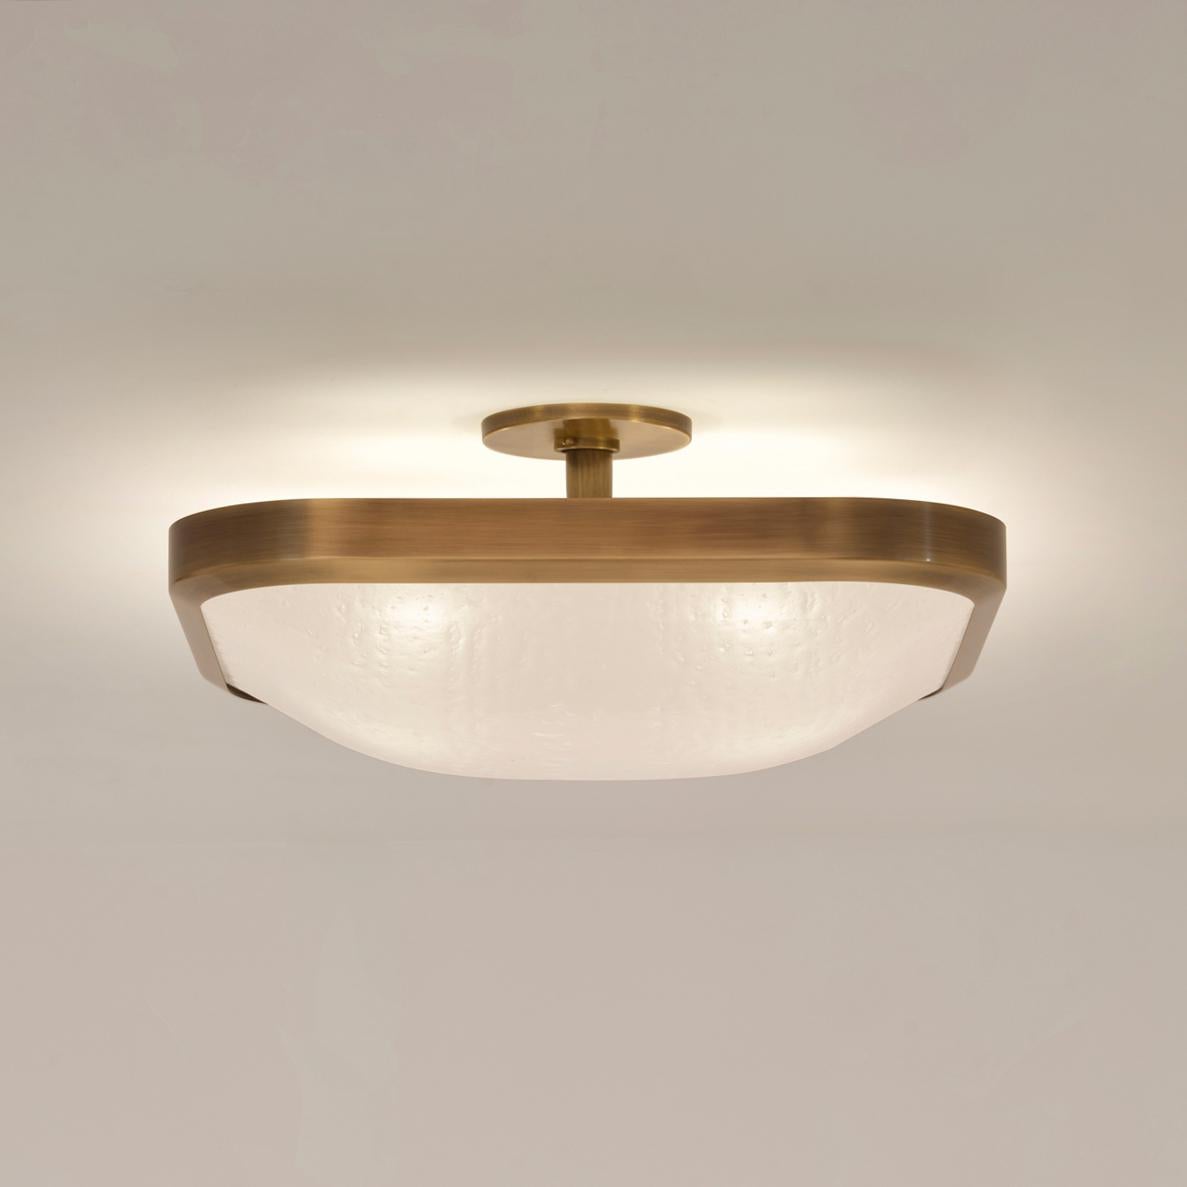 Italian Uno Square Ceiling Light by Gaspare Asaro-Satin Brass Finish For Sale